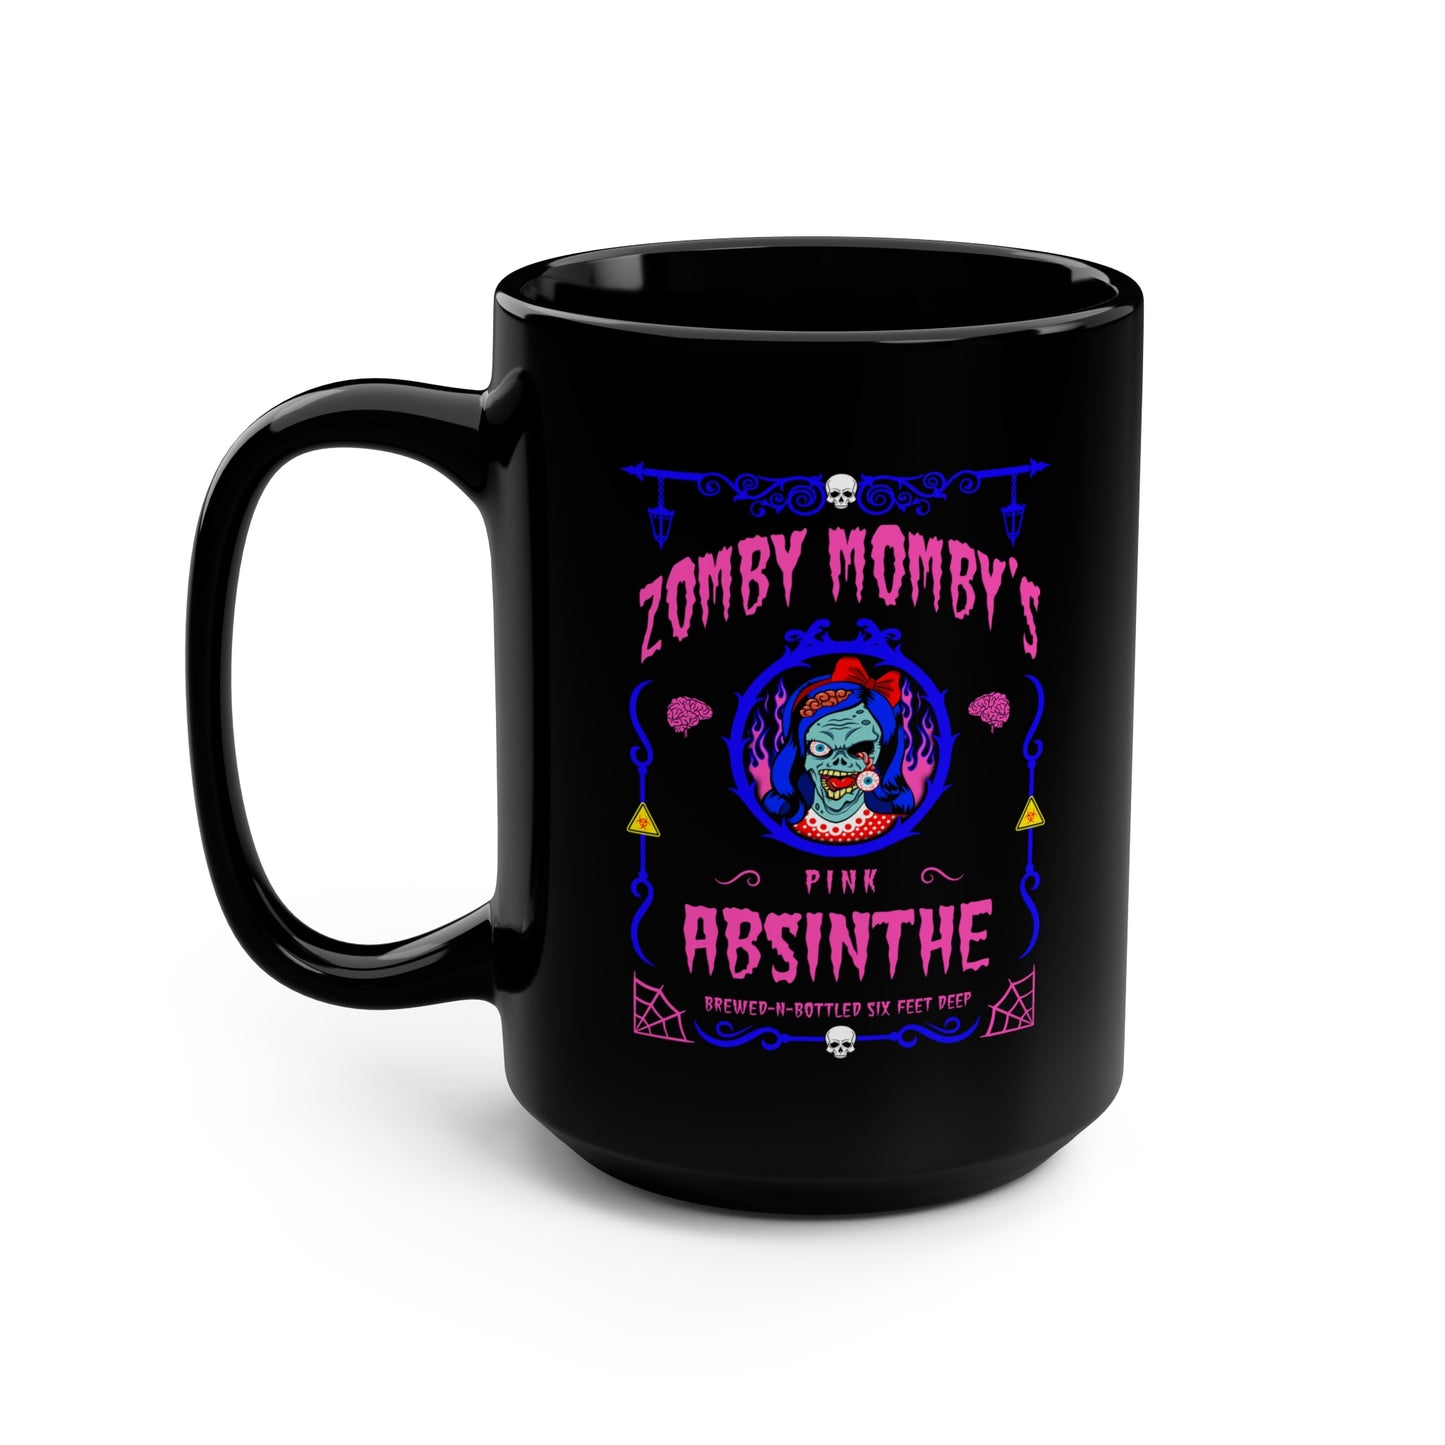 ABSINTHE MONSTERS 12 (ZOMBY MOMBY) Black Mug, 15oz